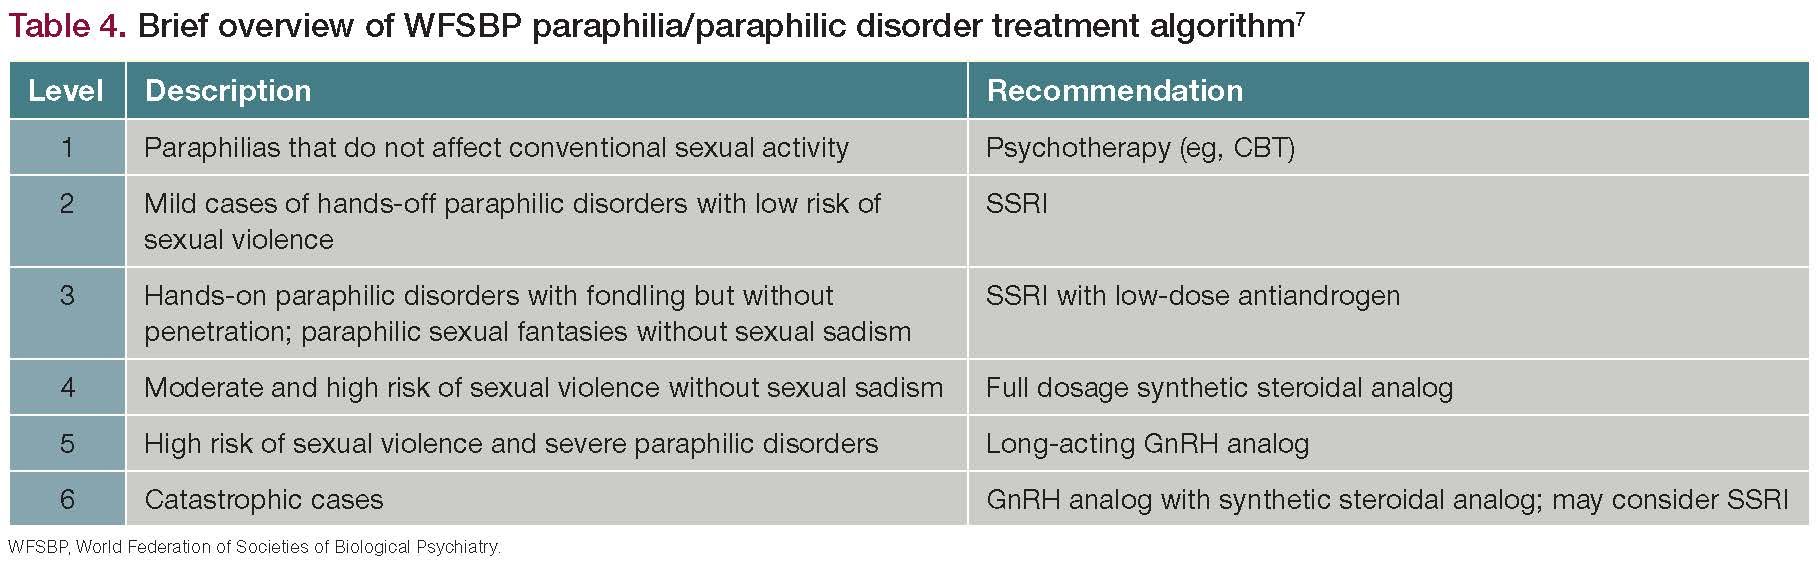 Table 4. Brief overview of WFSBP paraphilia/paraphilic disorder treatment algorithm